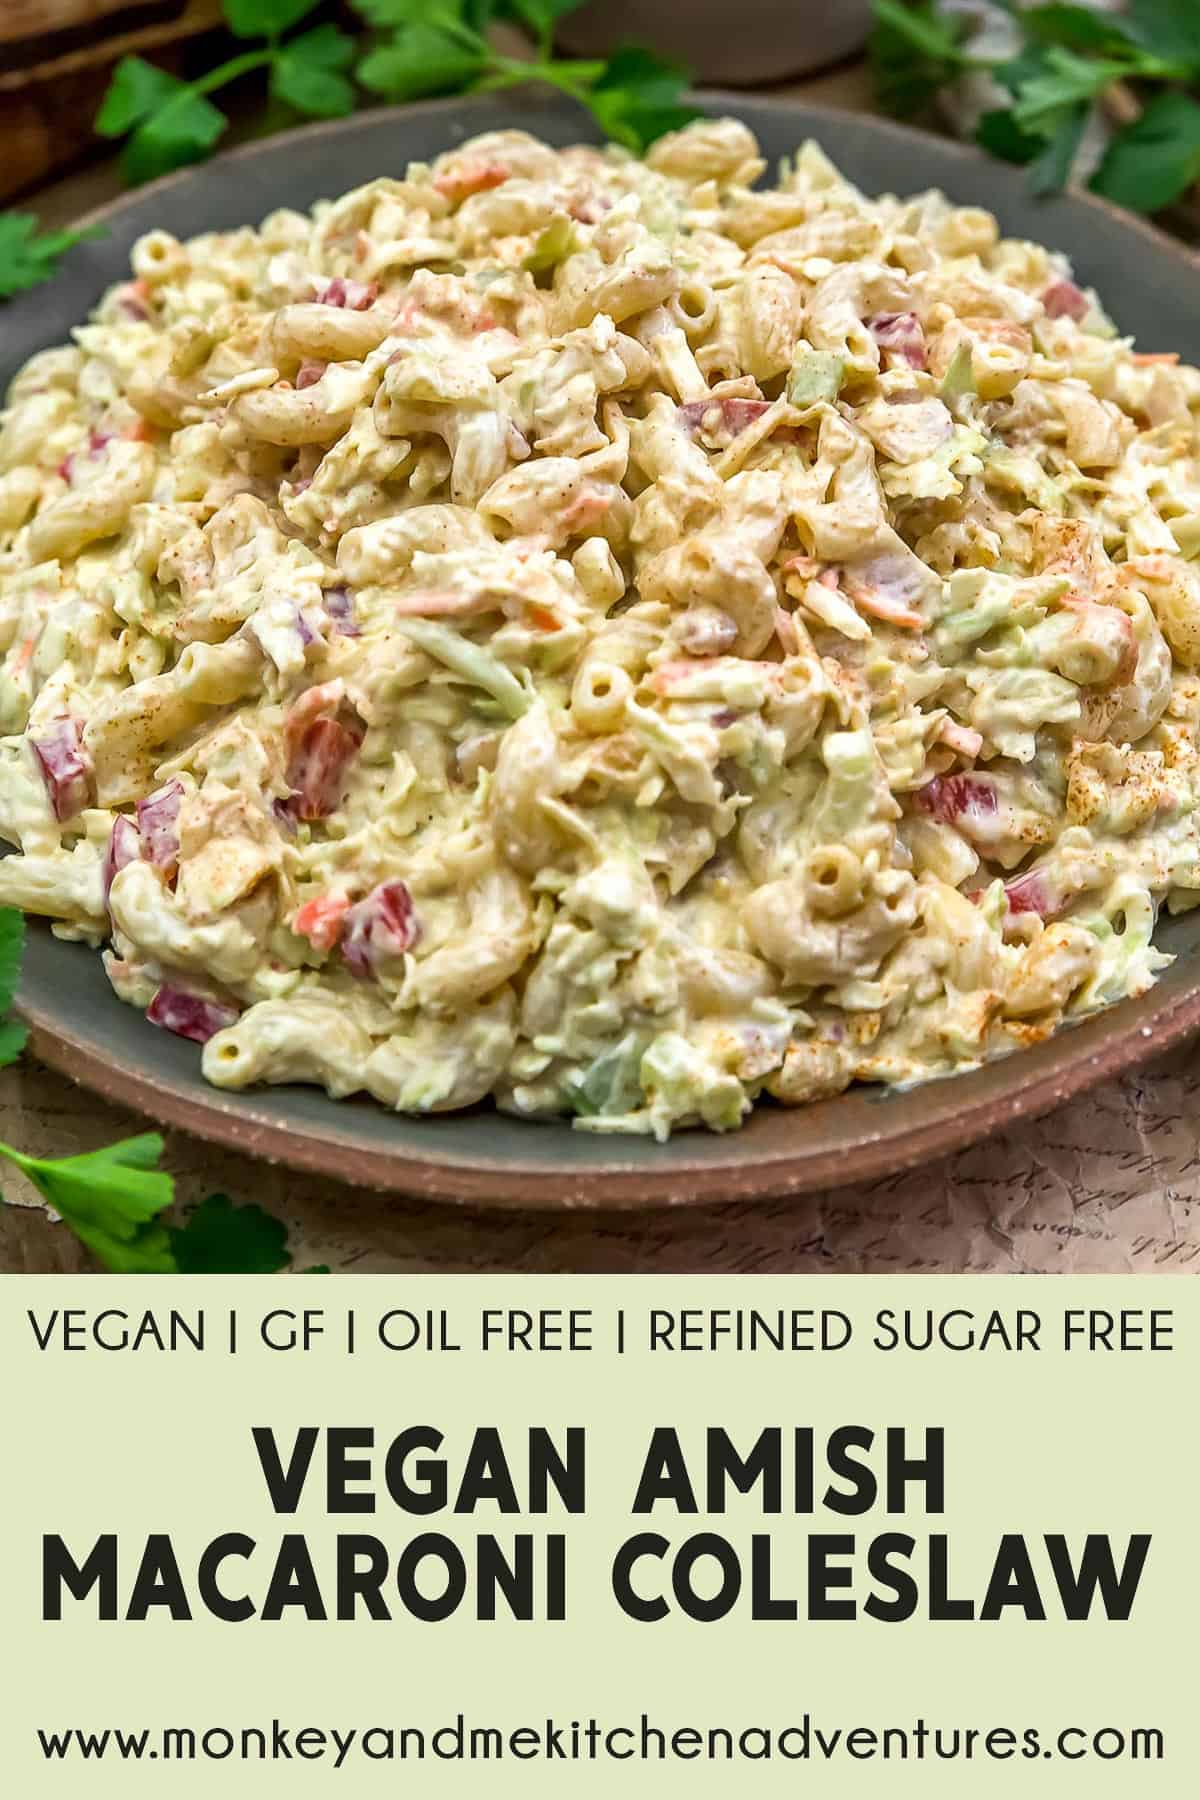 Vegan Amish Macaroni Coleslaw with text description